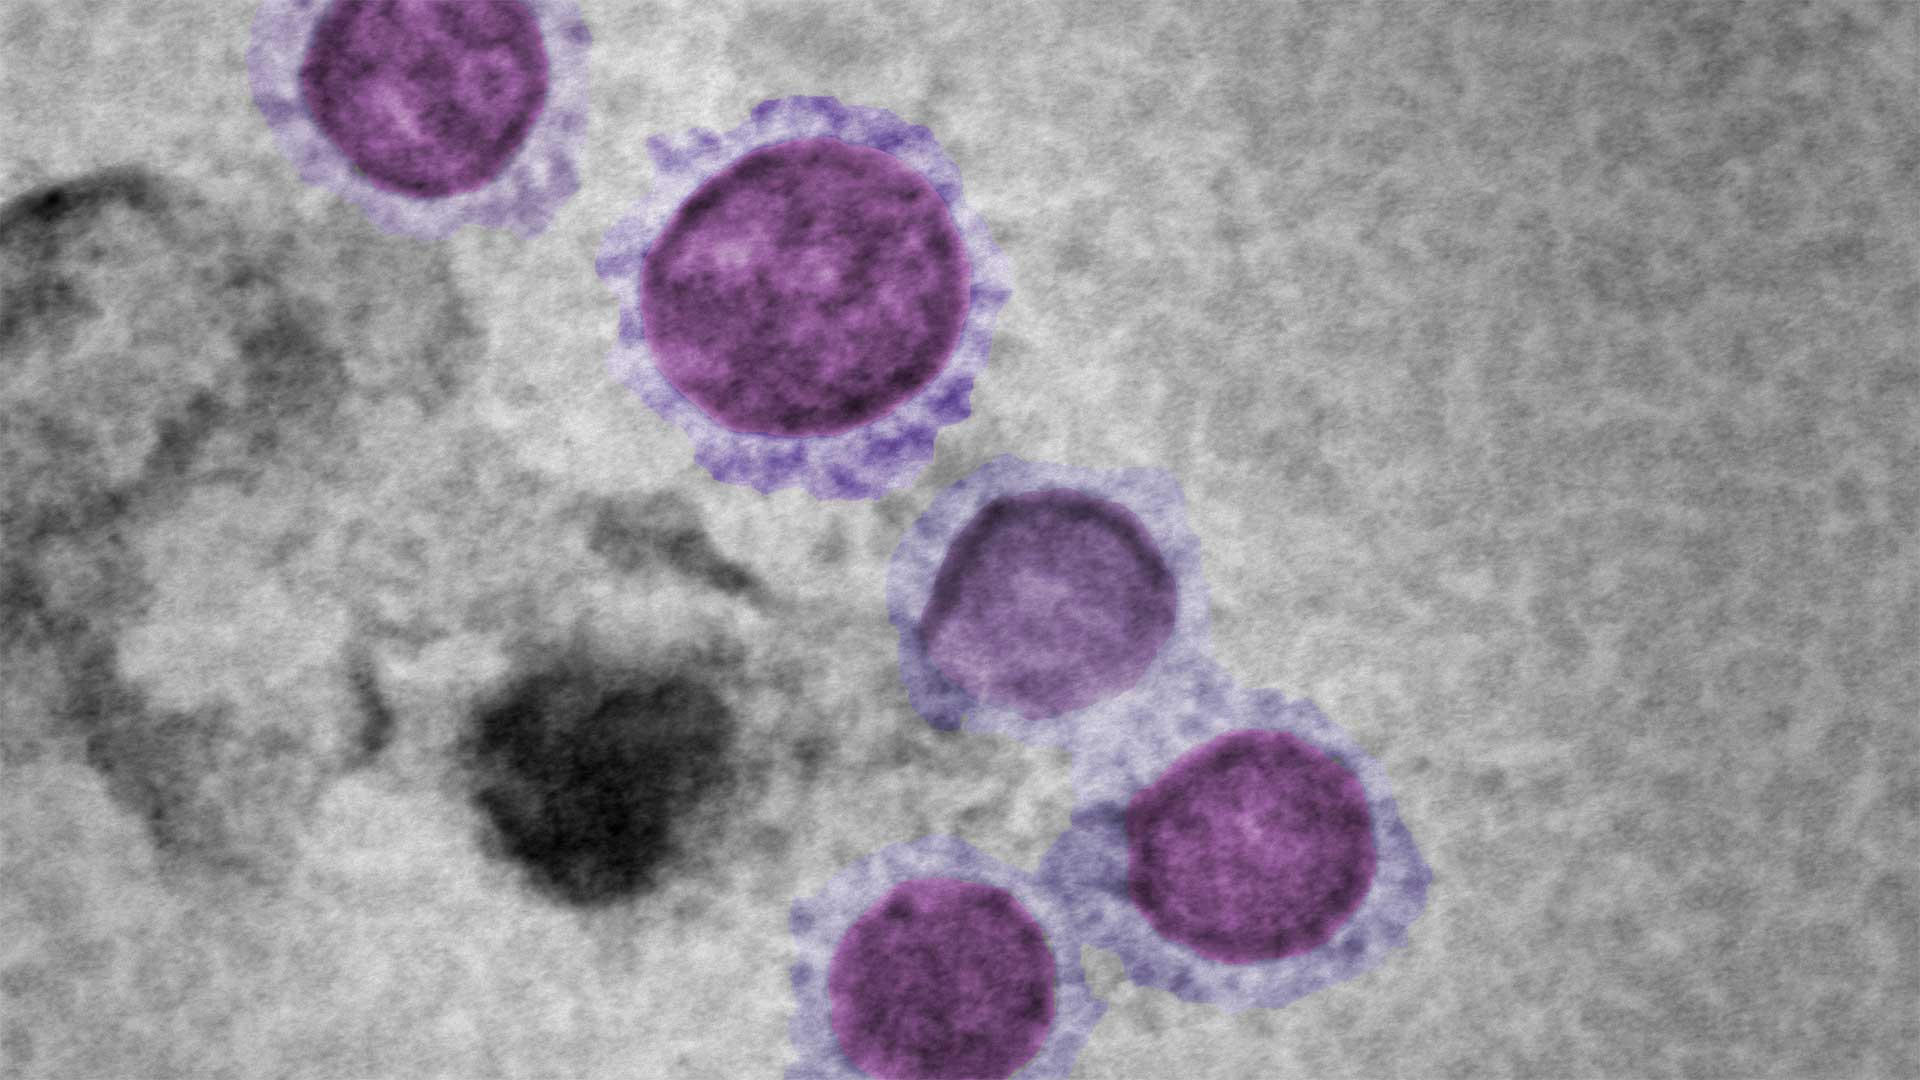 Covid 19 virus, imaged with ZEISS GeminiSEM 560. Courtesy of M. Hannah, Virus Reference Department, Public Health England, UK.